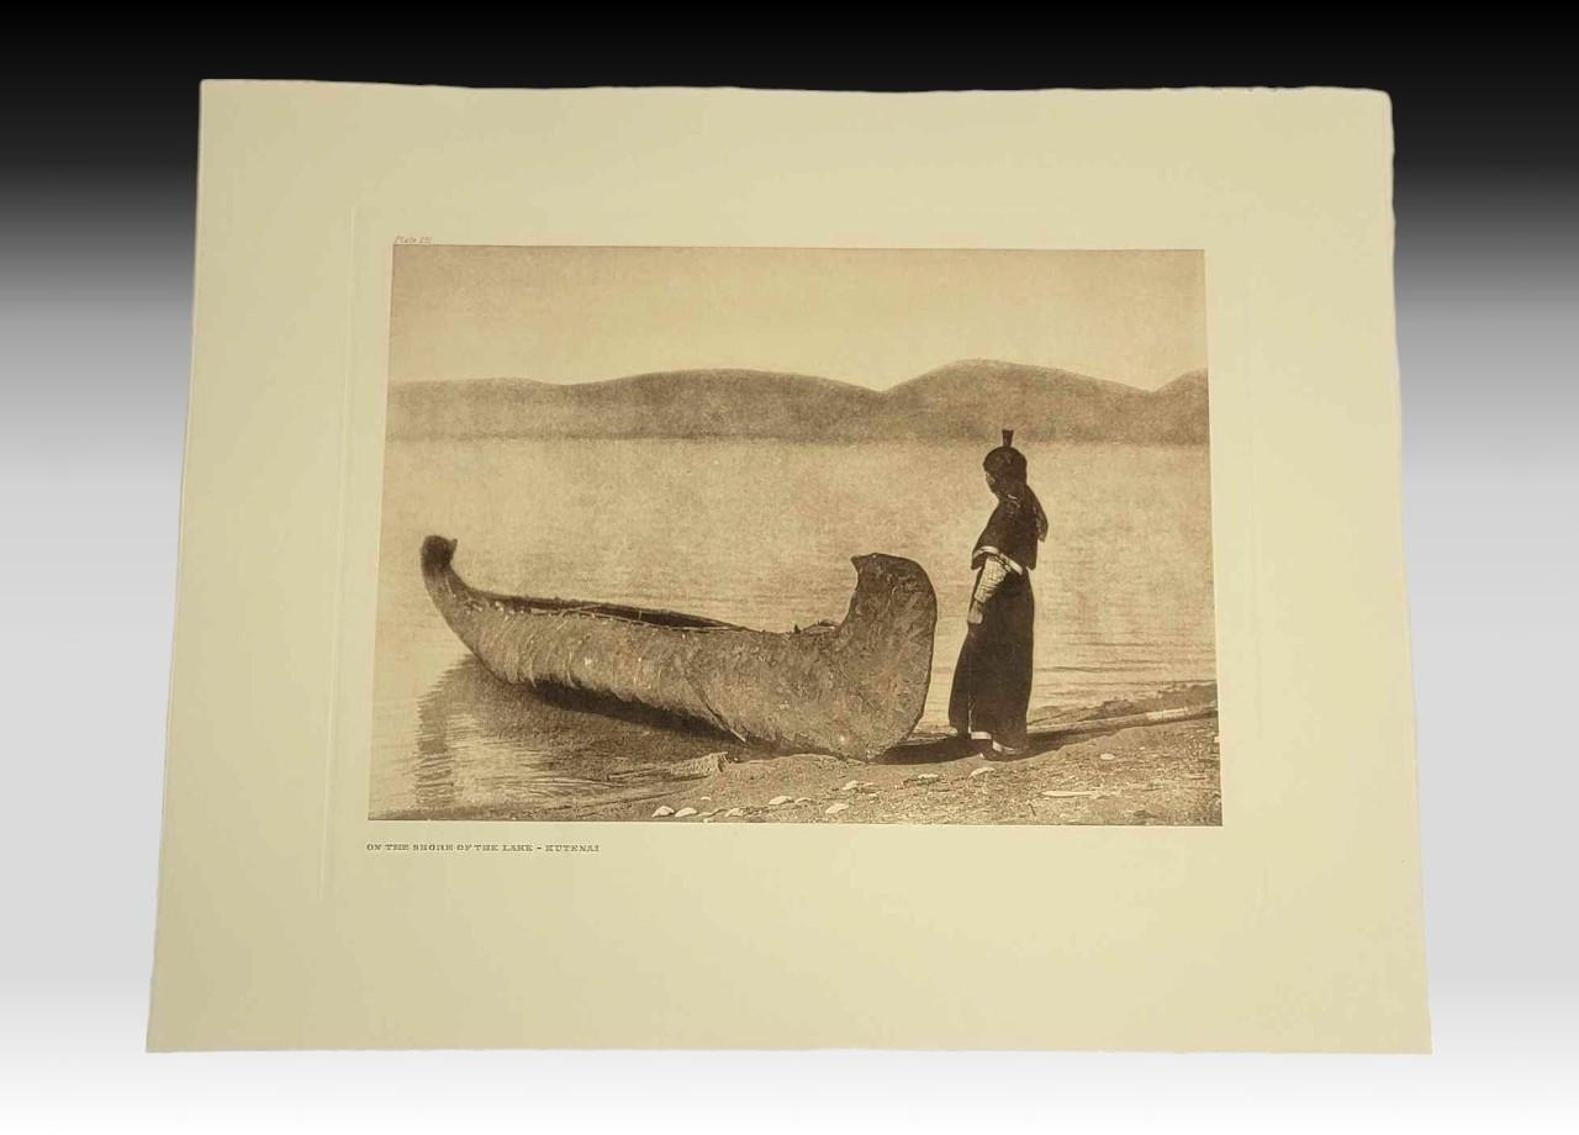 On the Shore of the Lake - Kutenai" by Edward S. Curtis, c.1910